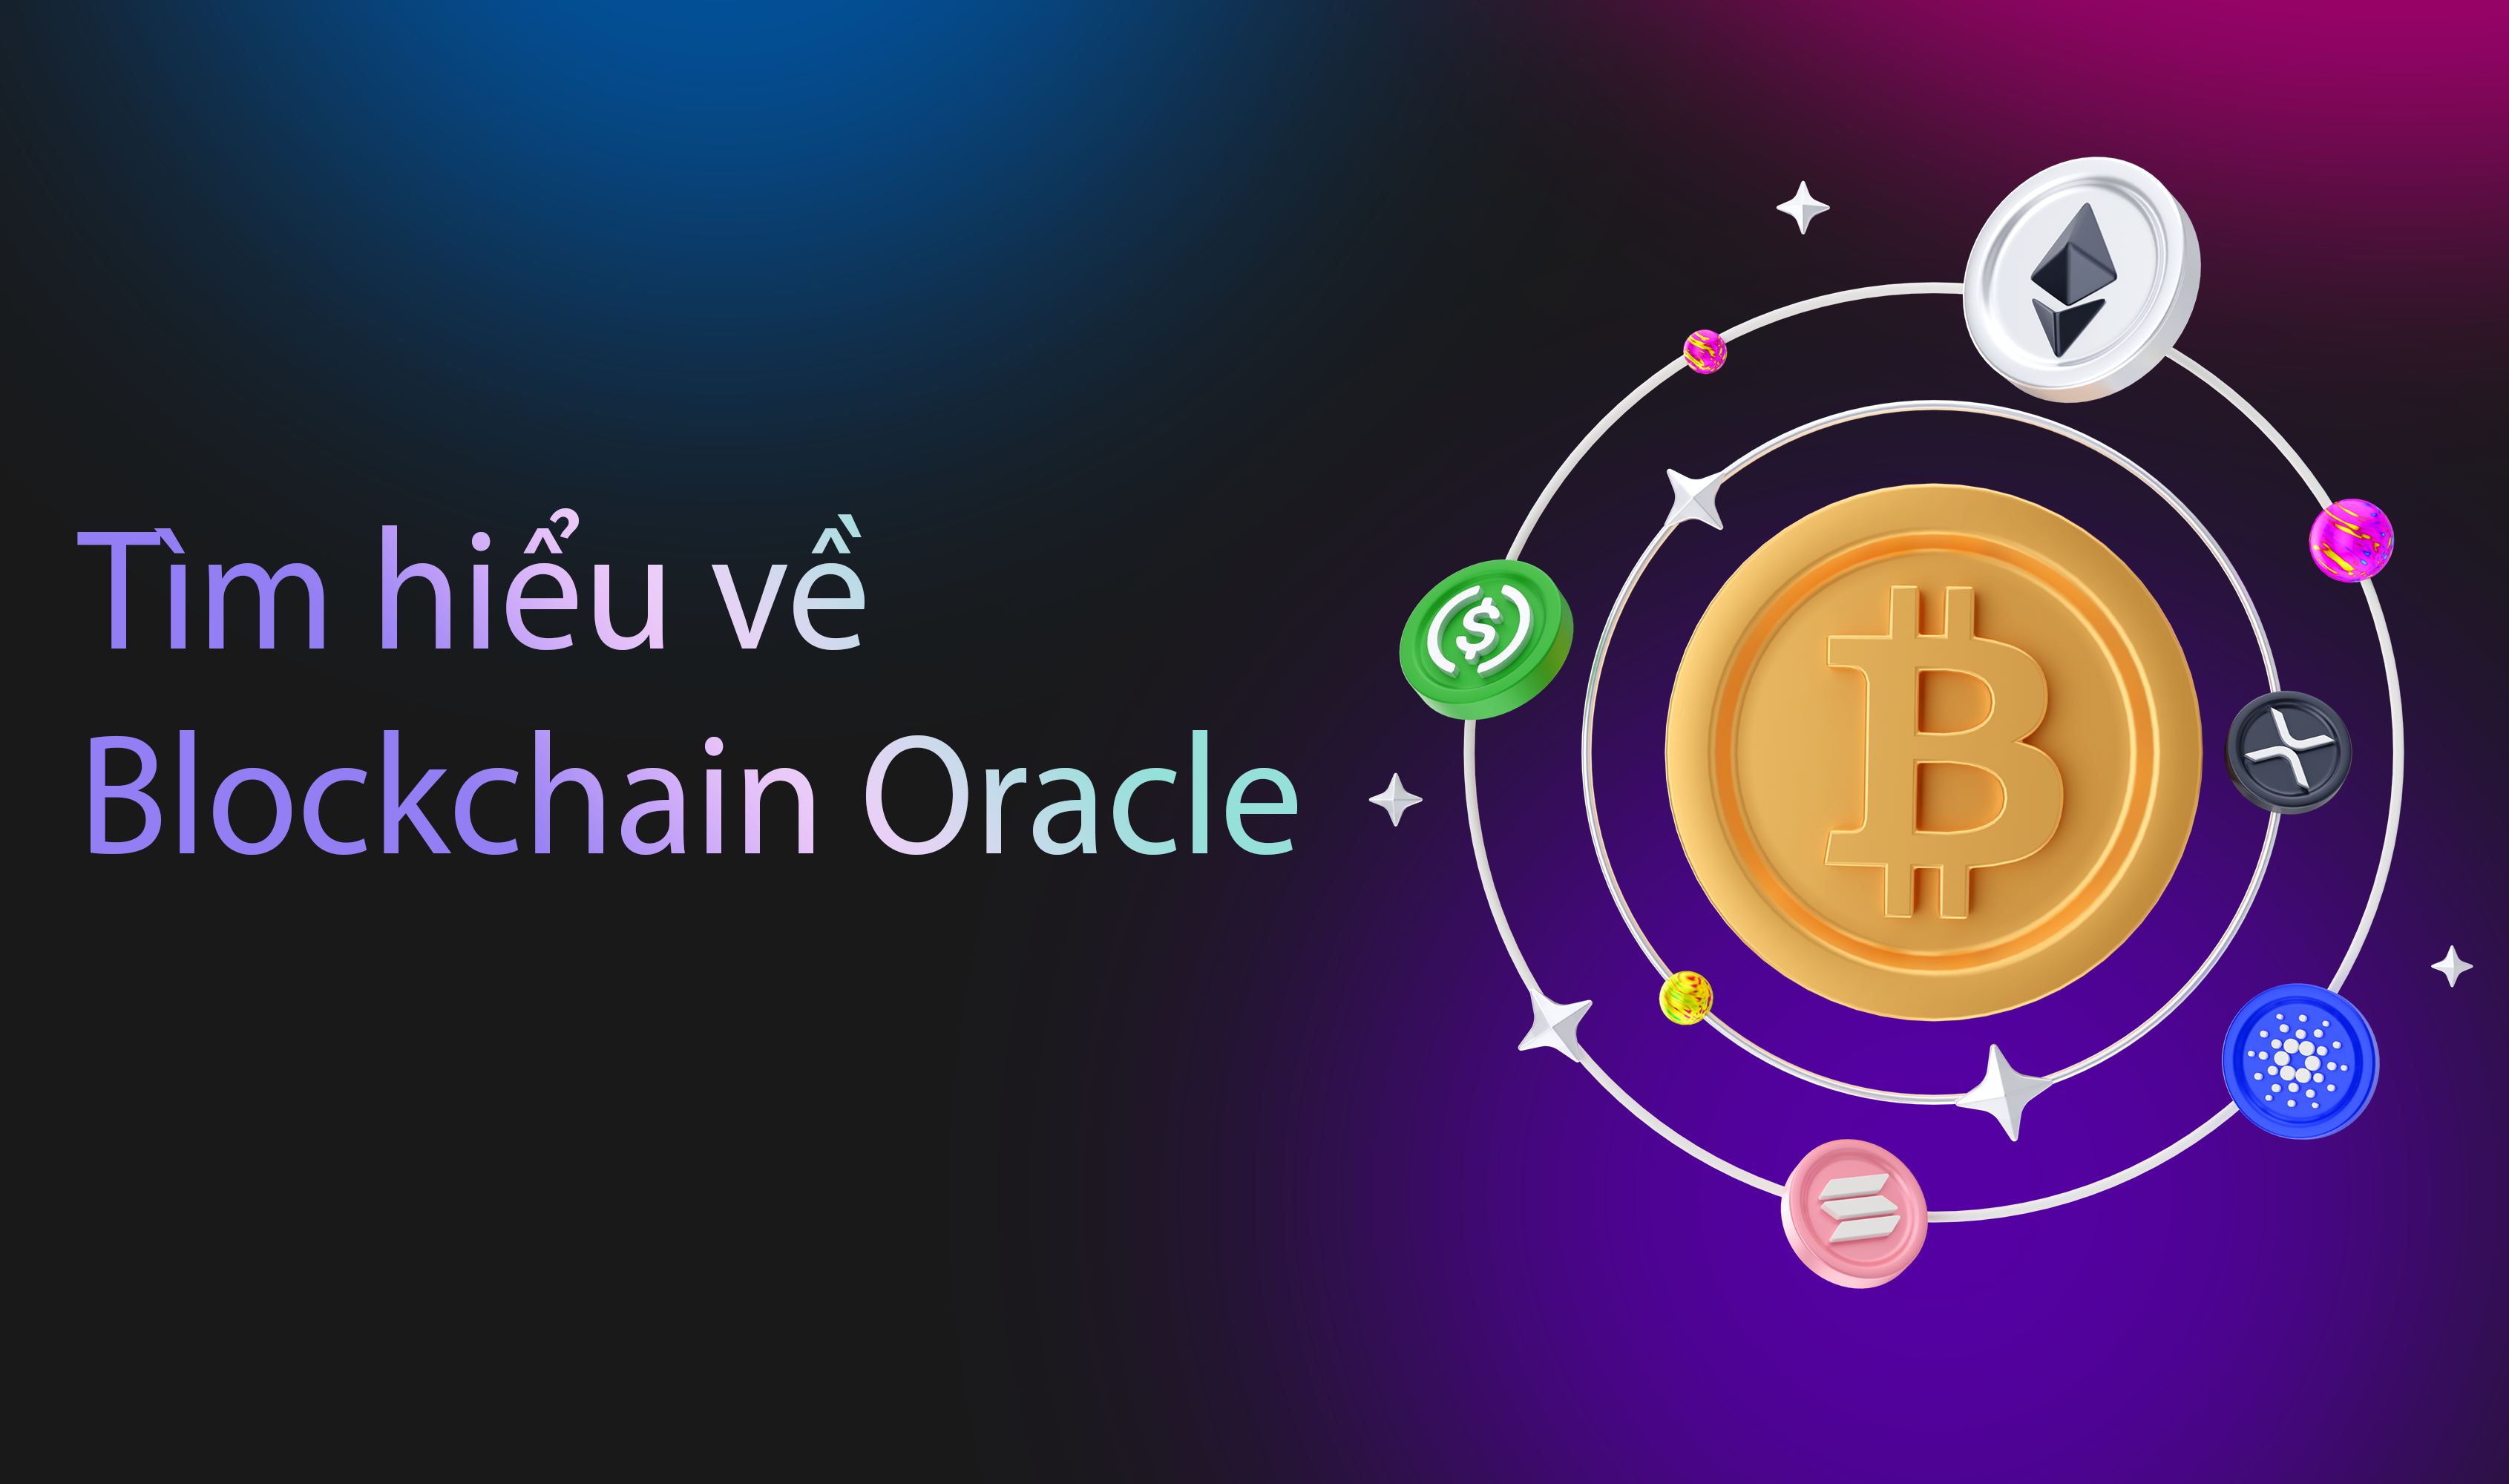 Tìm hiểu về Blockchain Oracle